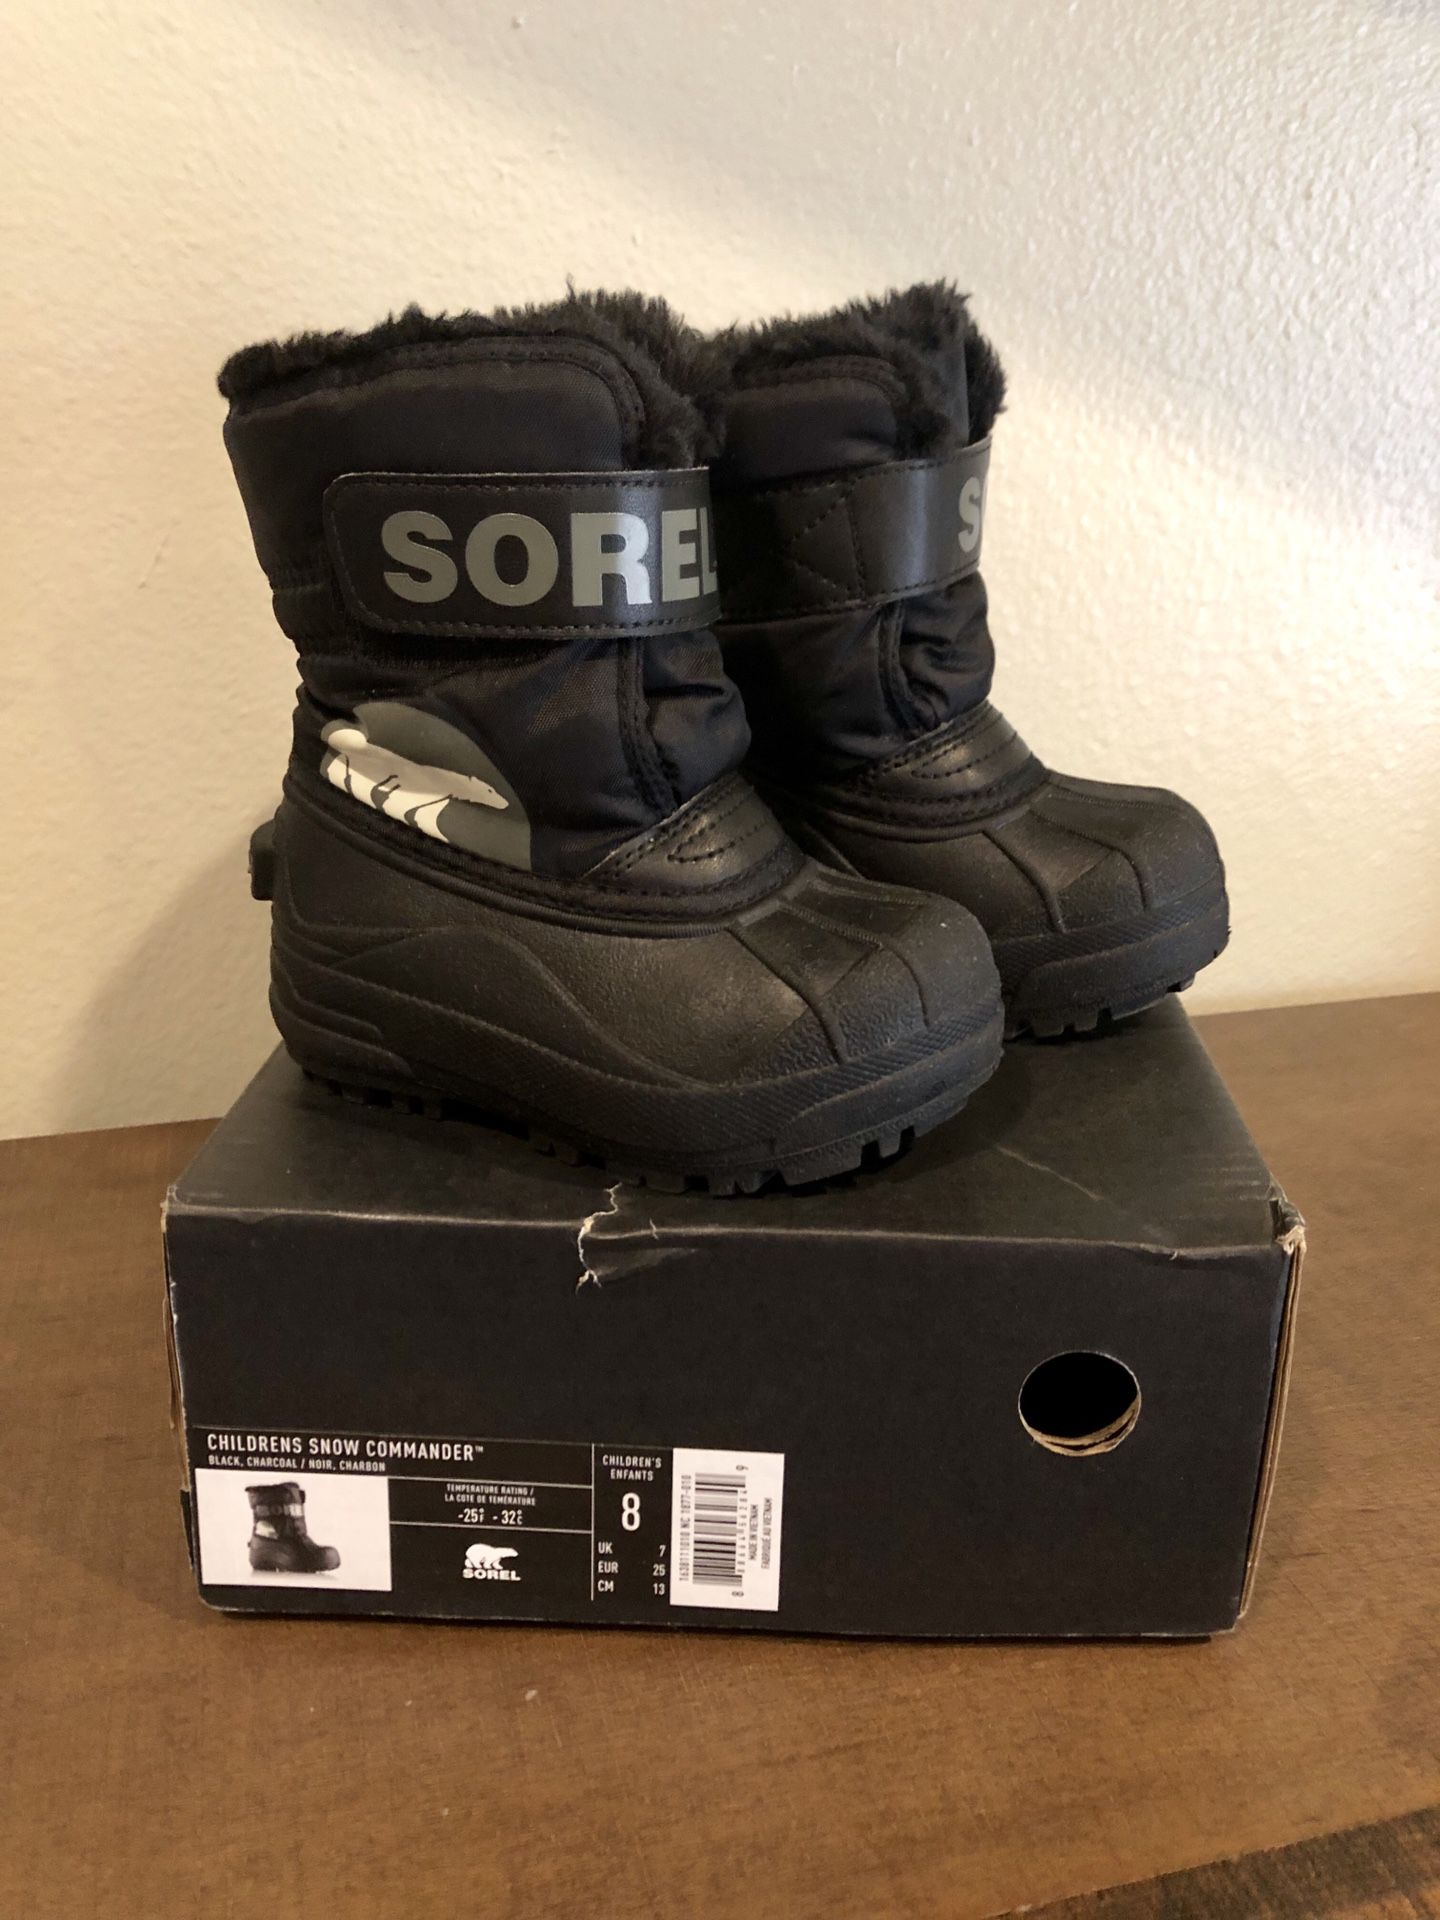 Sorel Snow Boots, Childrens Snow Commander, Size 8 toddler/kid